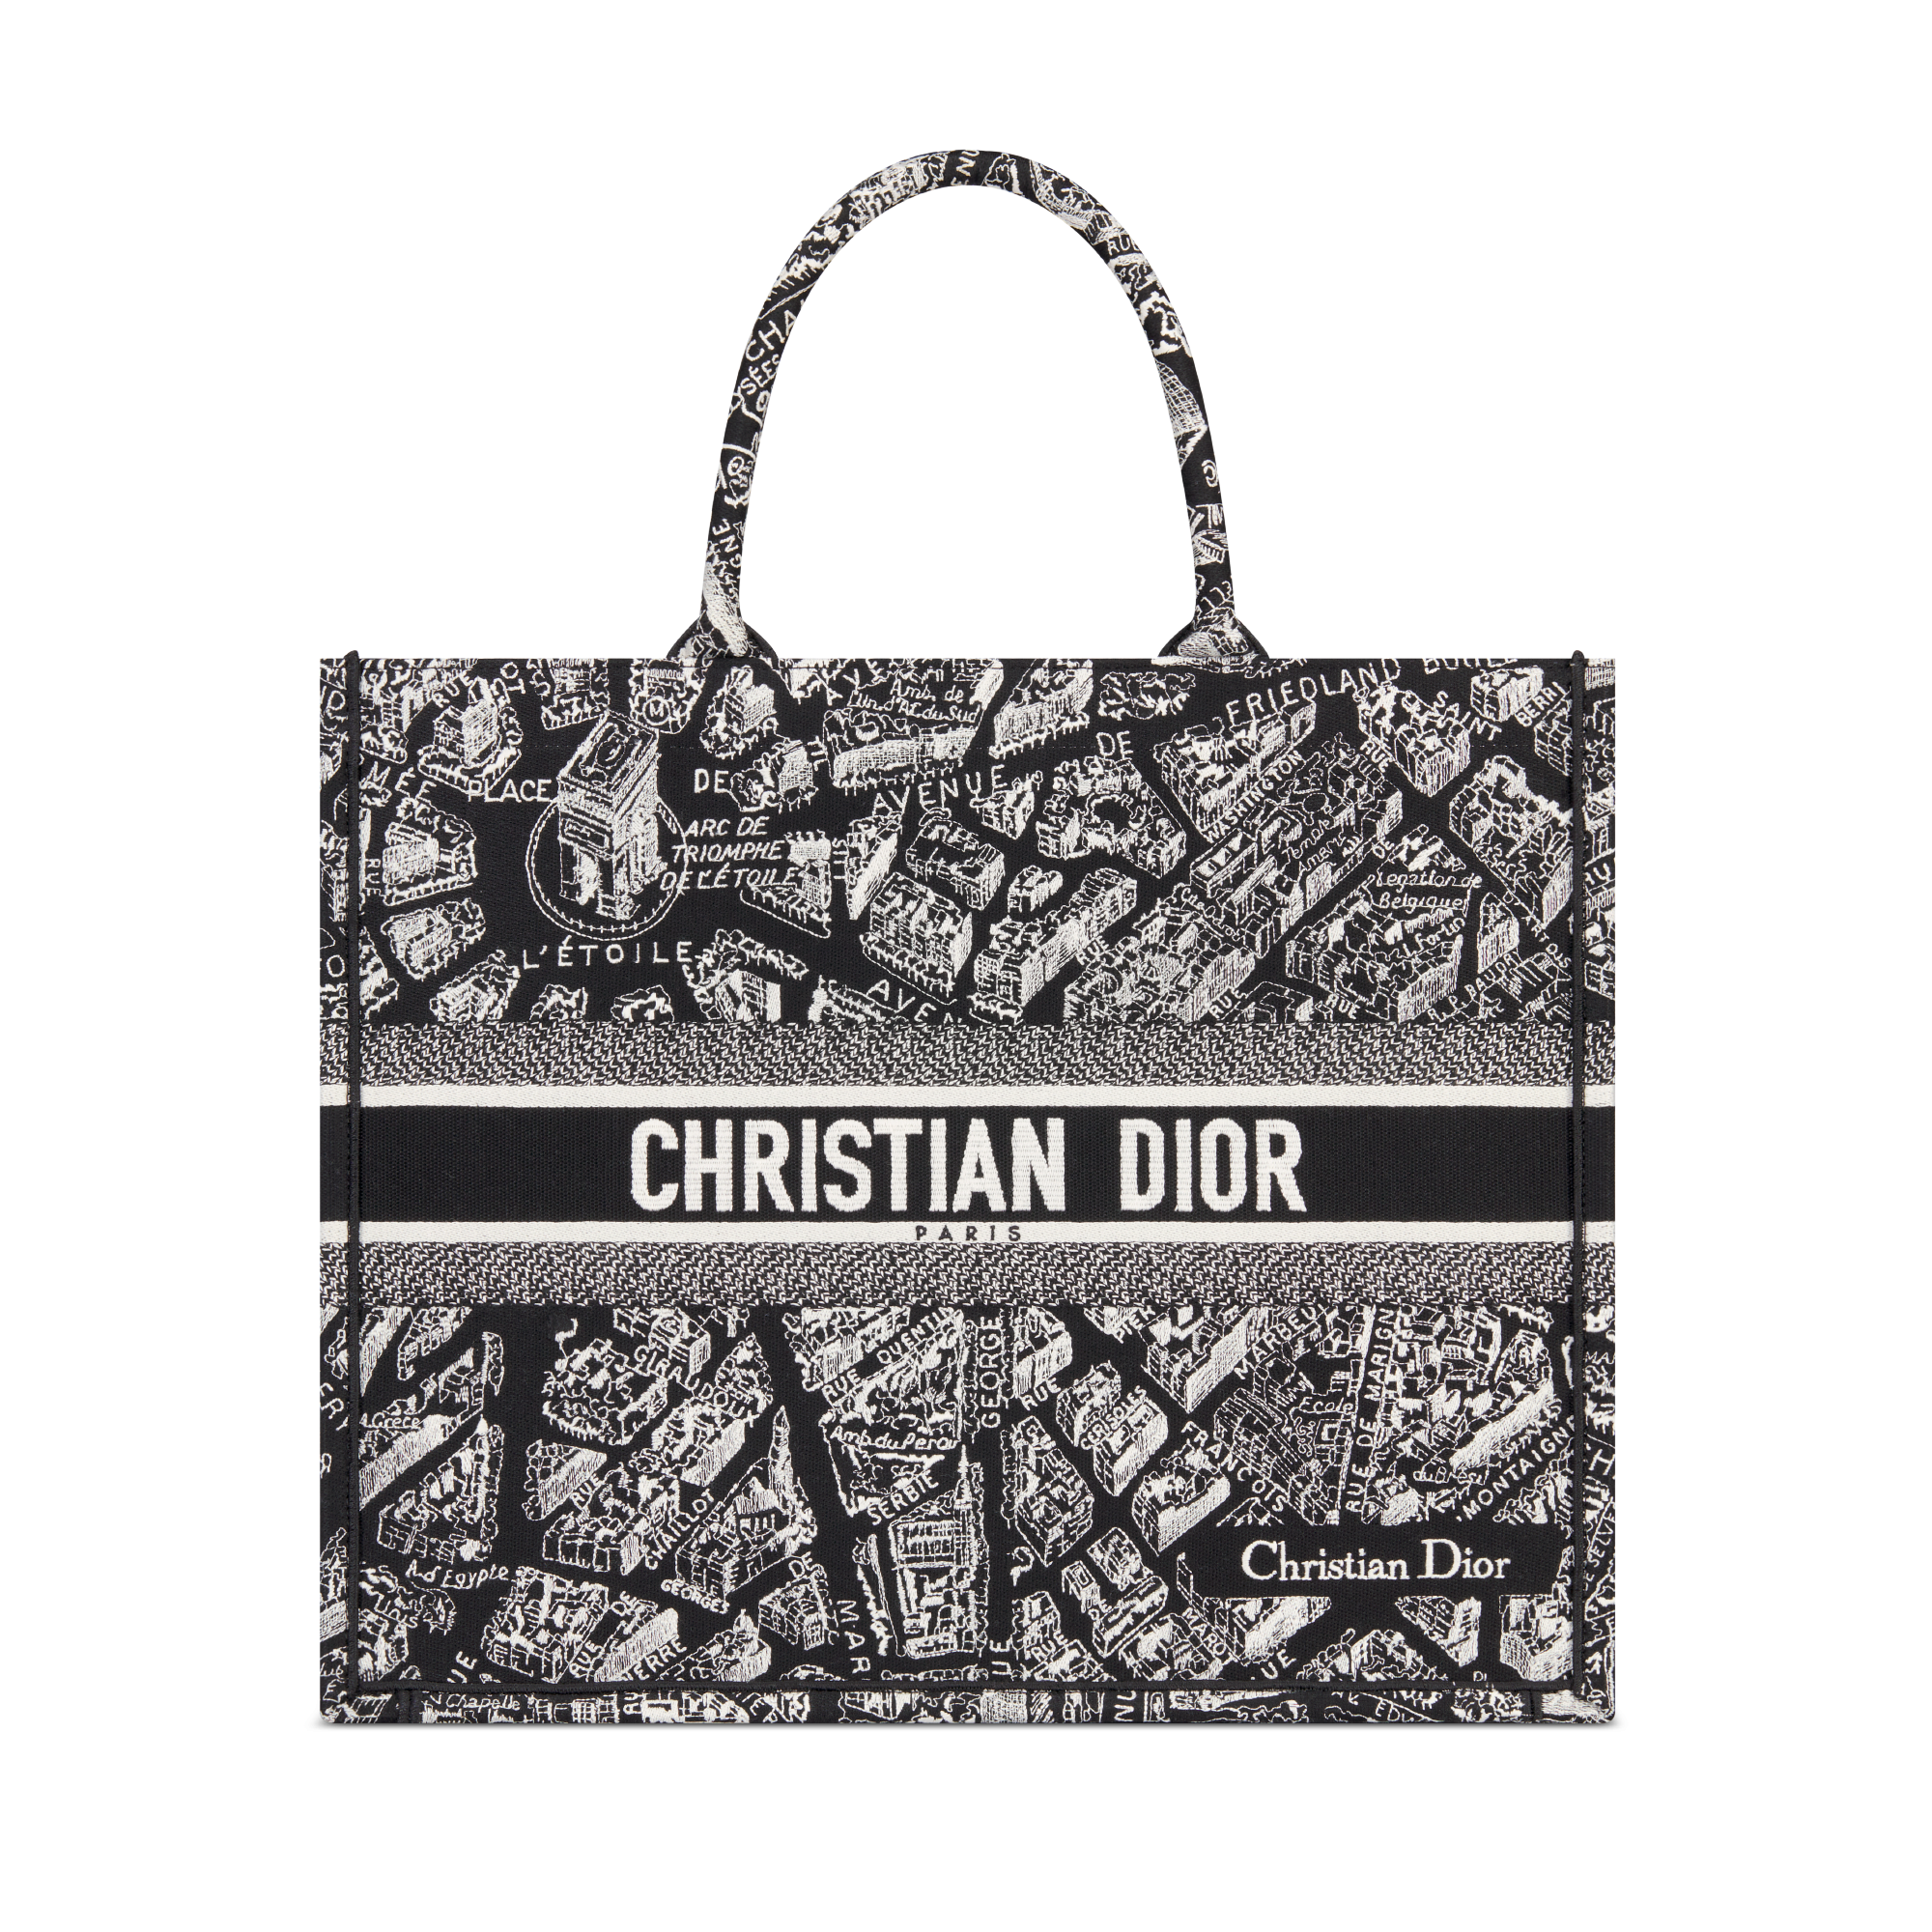 dior shopping bag